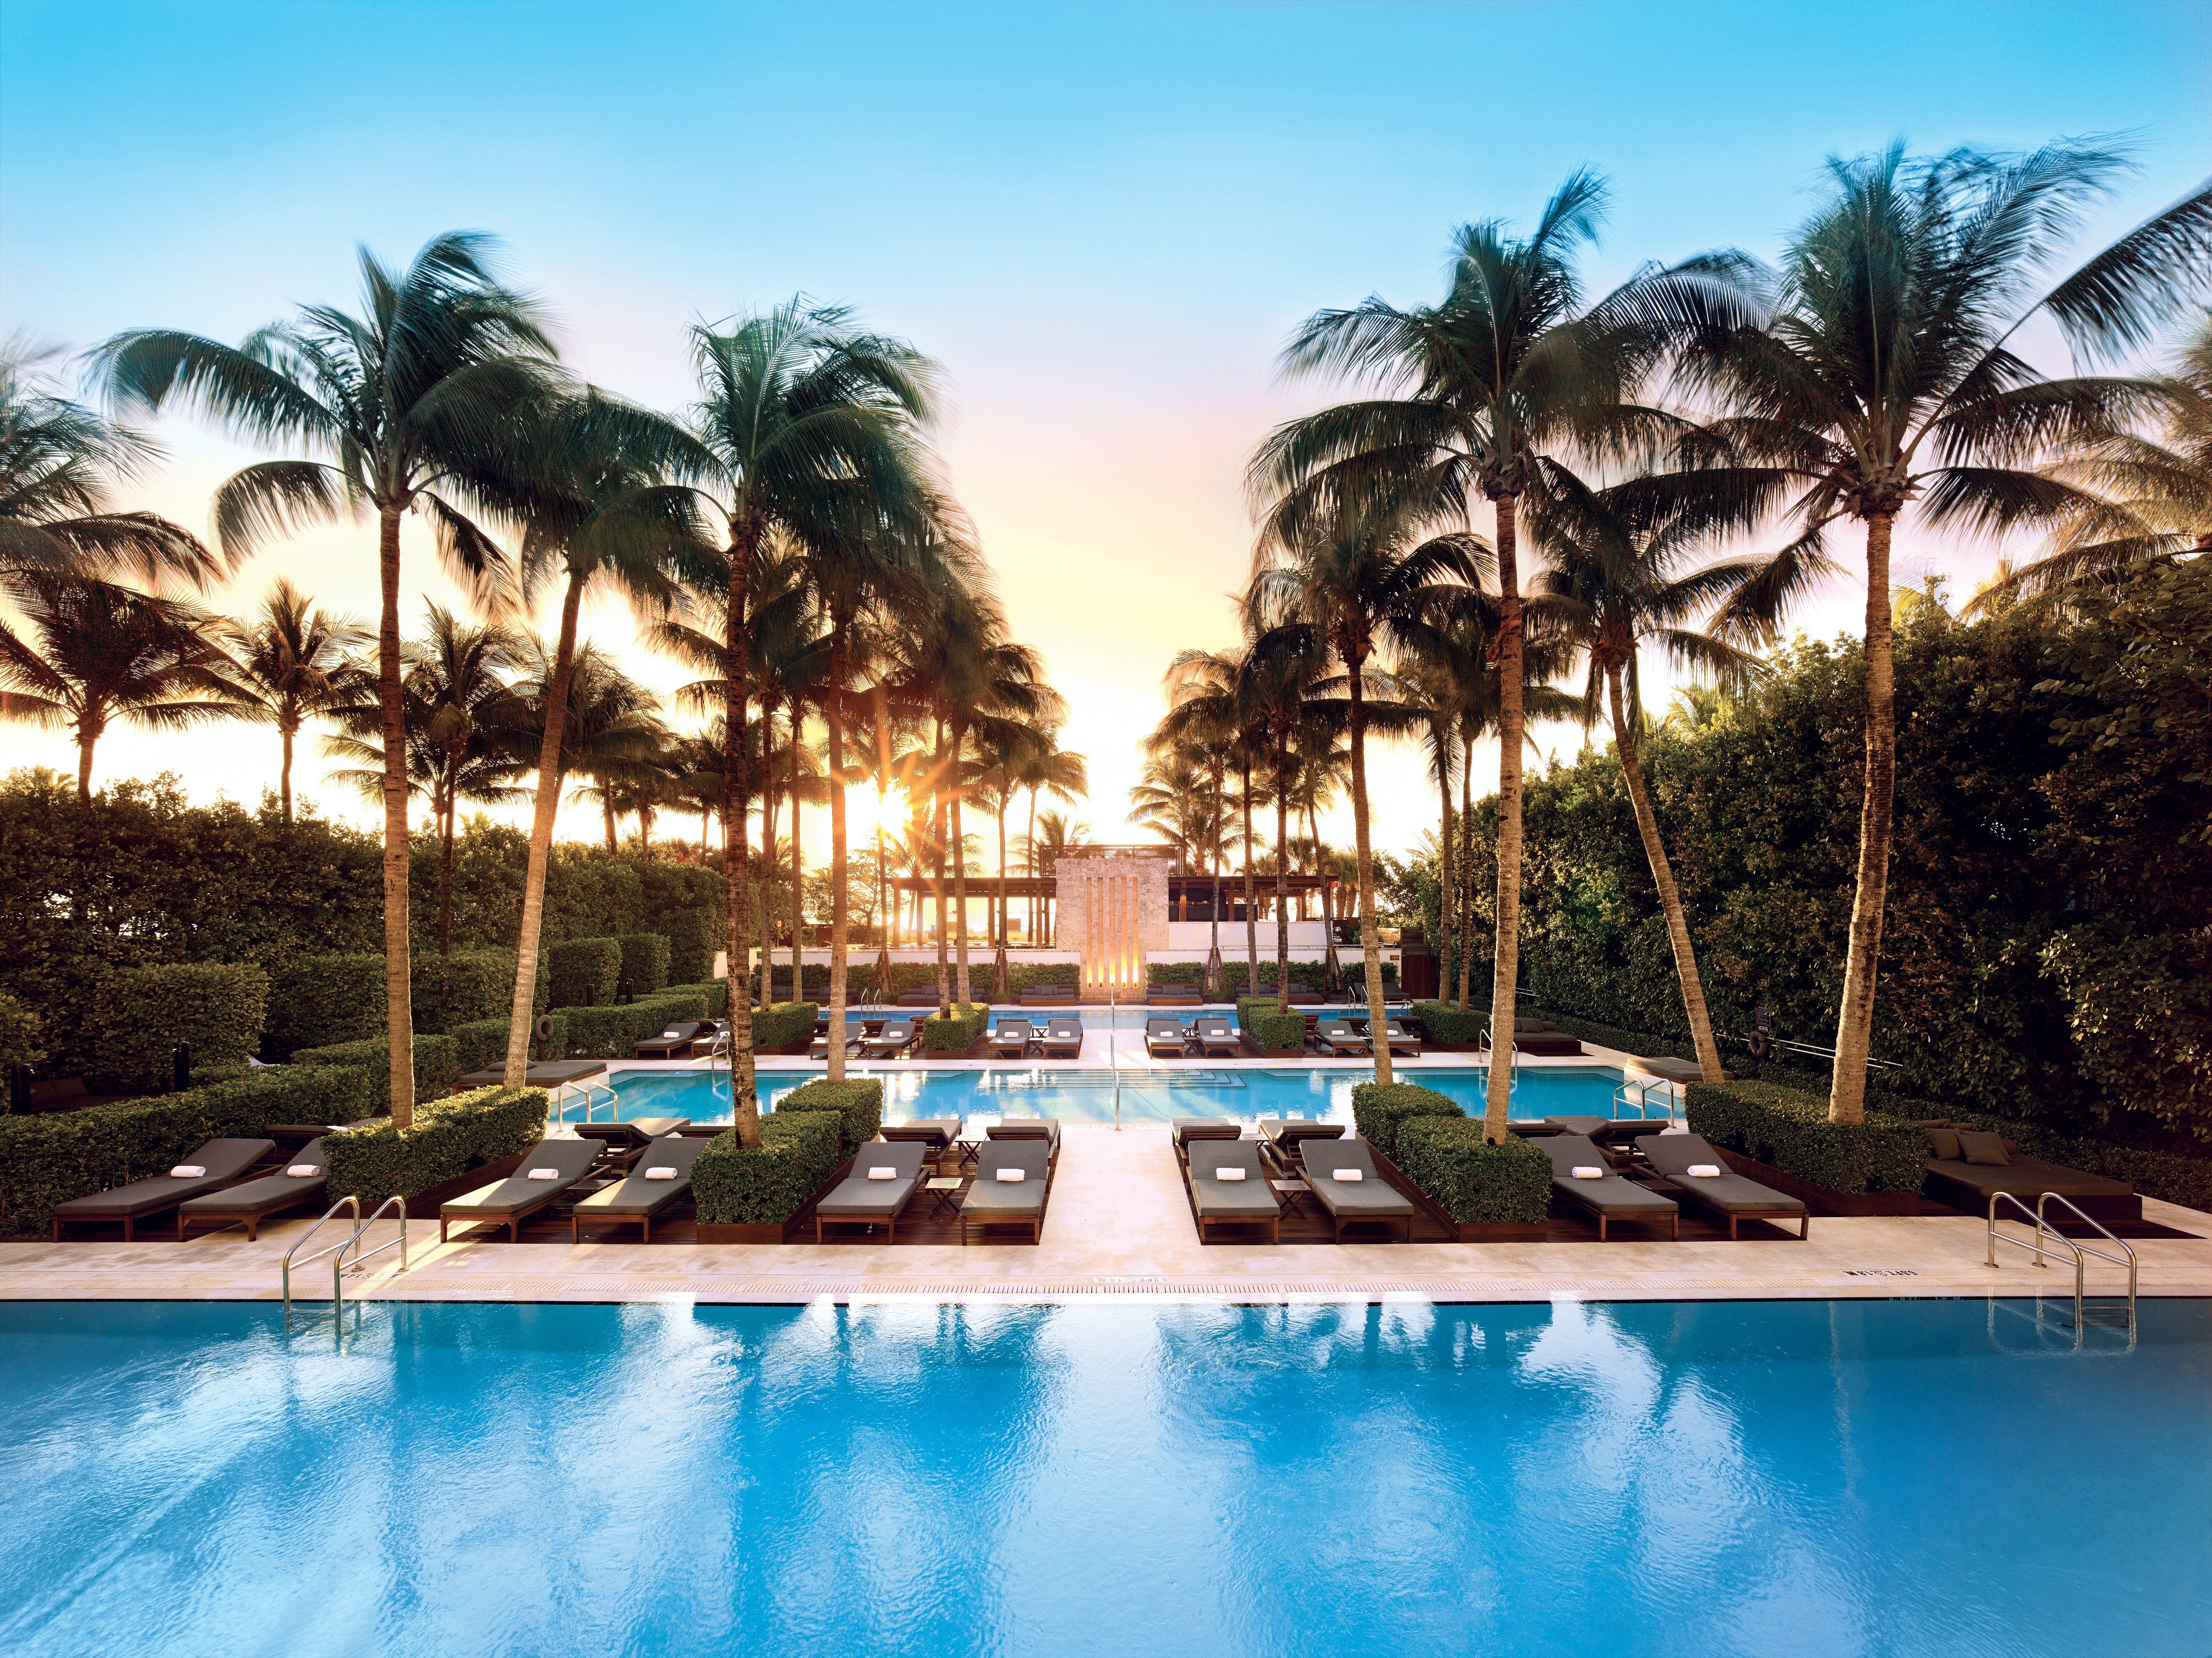 The pool area at The Setai in Miami Beach, Florida. Photo: Handout